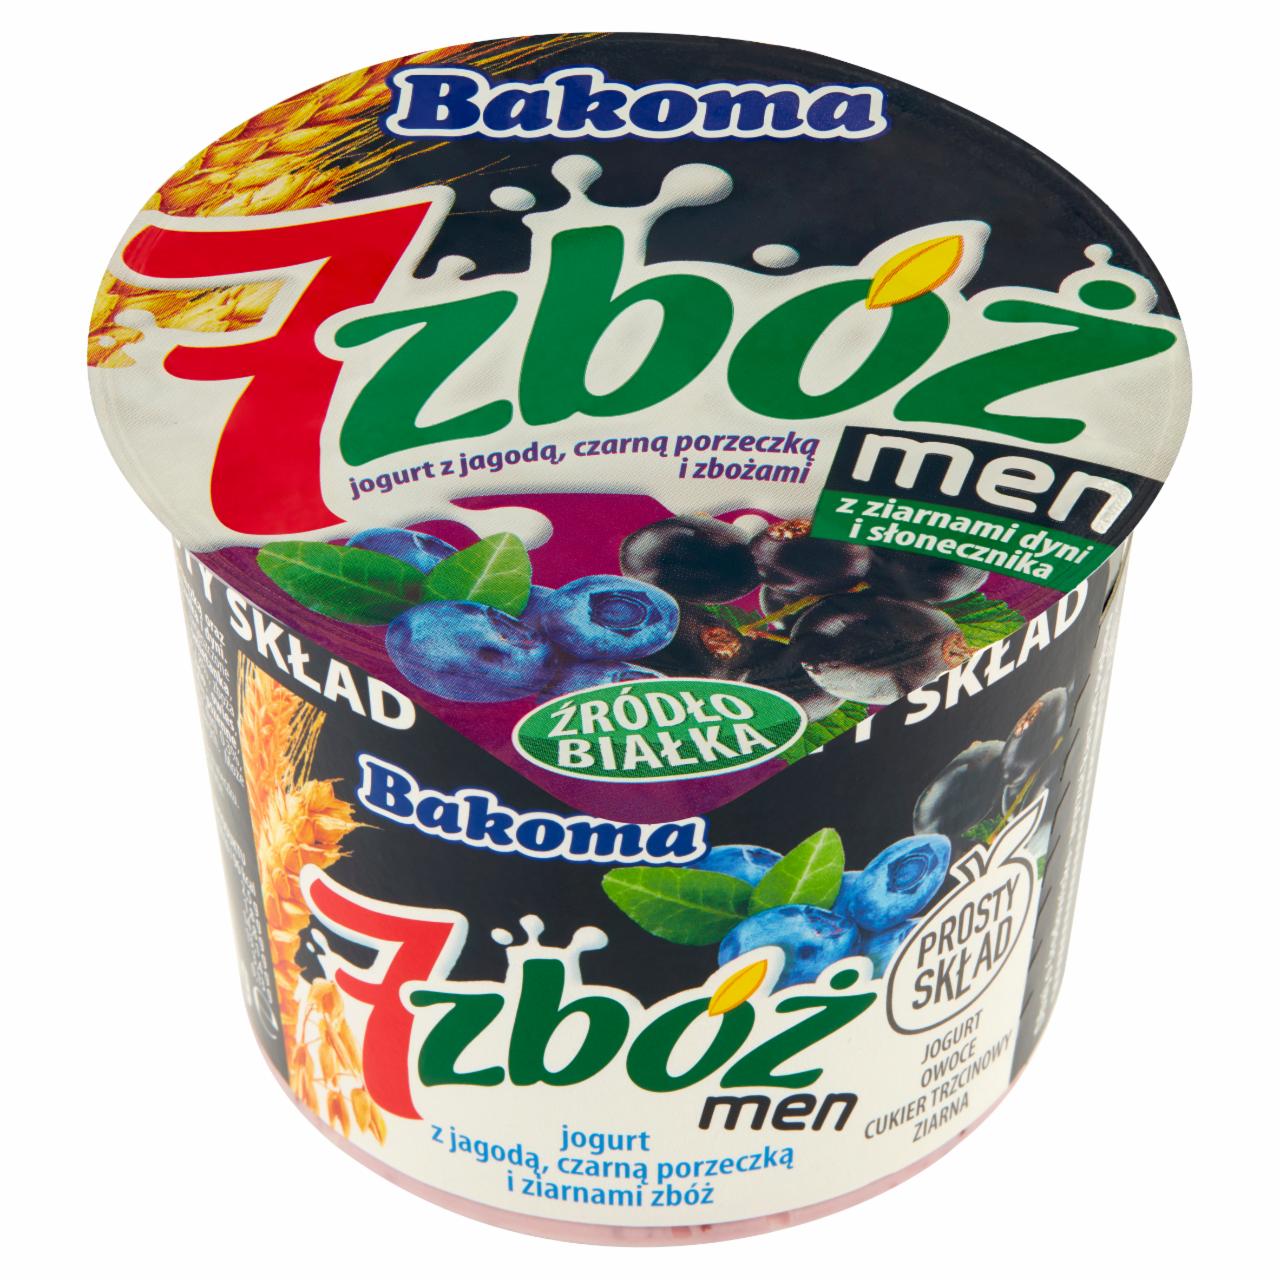 Photo - Bakoma 7 zbóż men Yoghurt with Berry Blackcurrant and Cereal 300 g